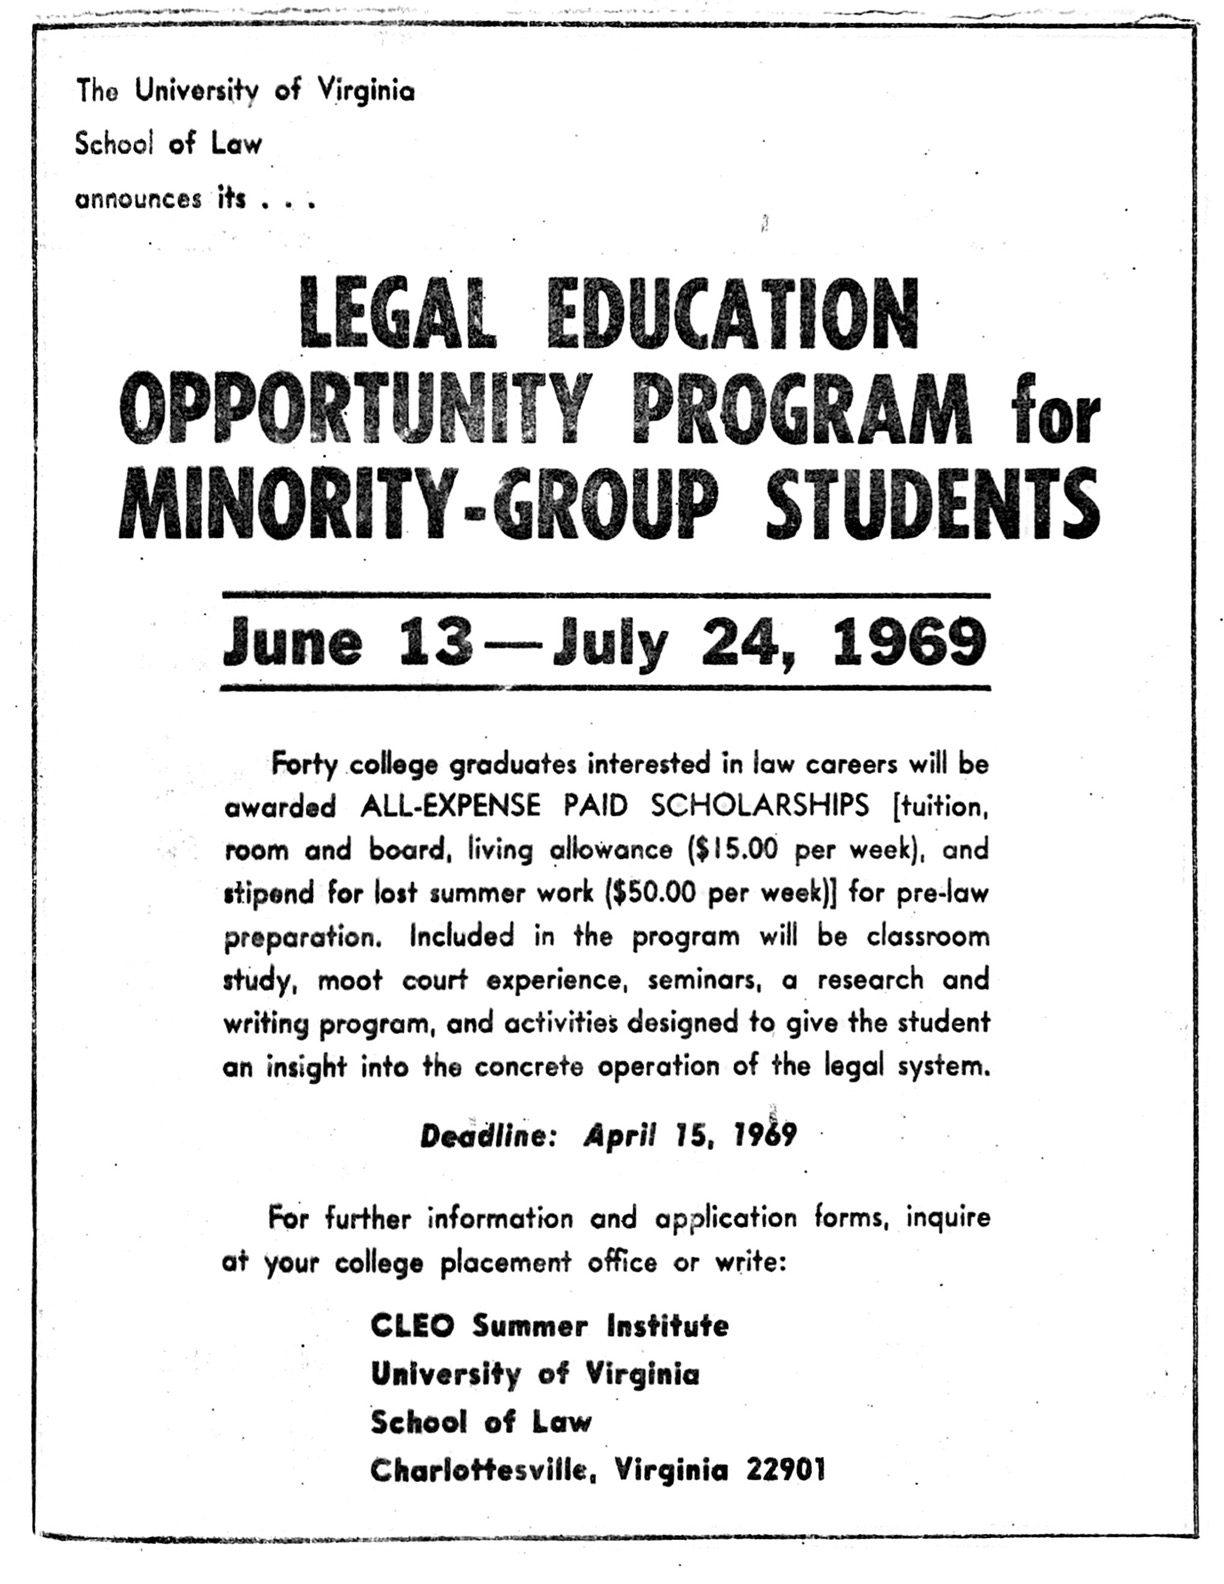 Newspaper advertisement for UVA's CLEO program